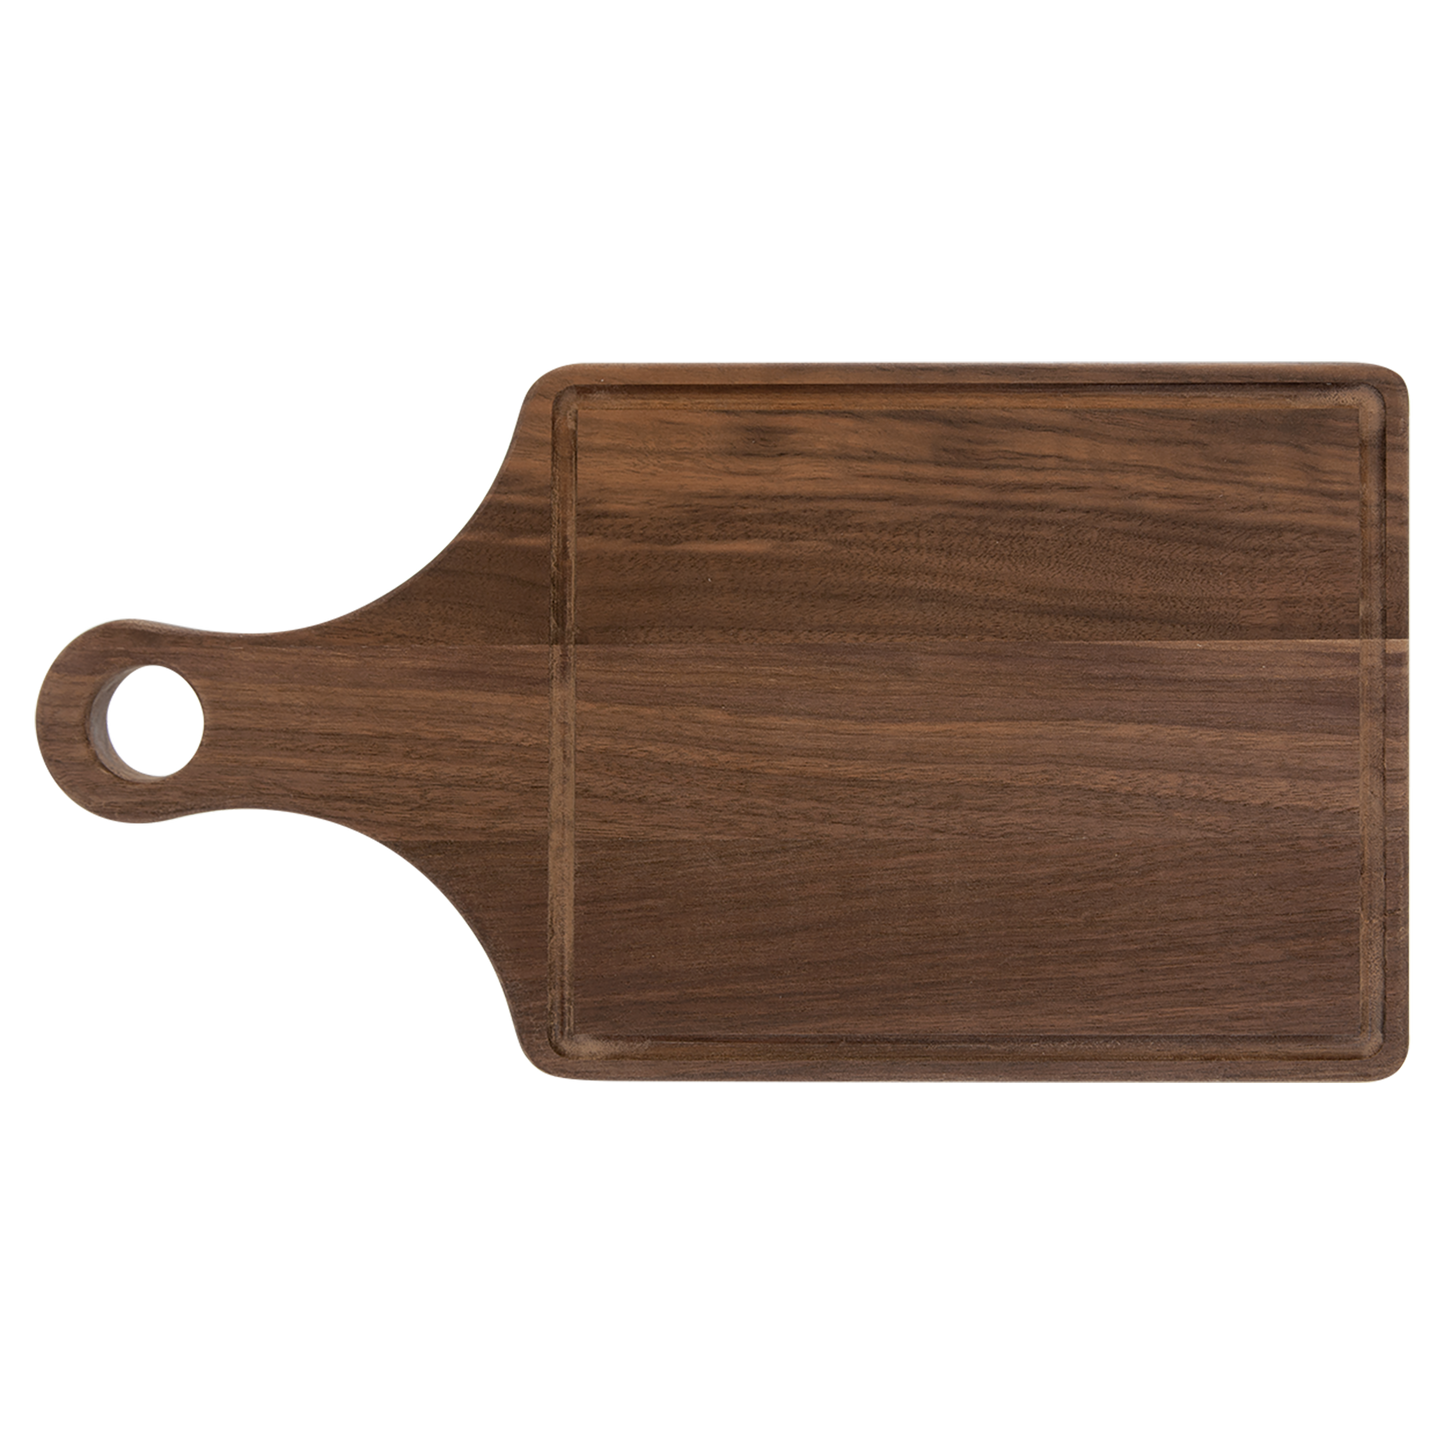 13 1/2" x 7" Walnut Cutting Board Paddle Shape with Drip Ring